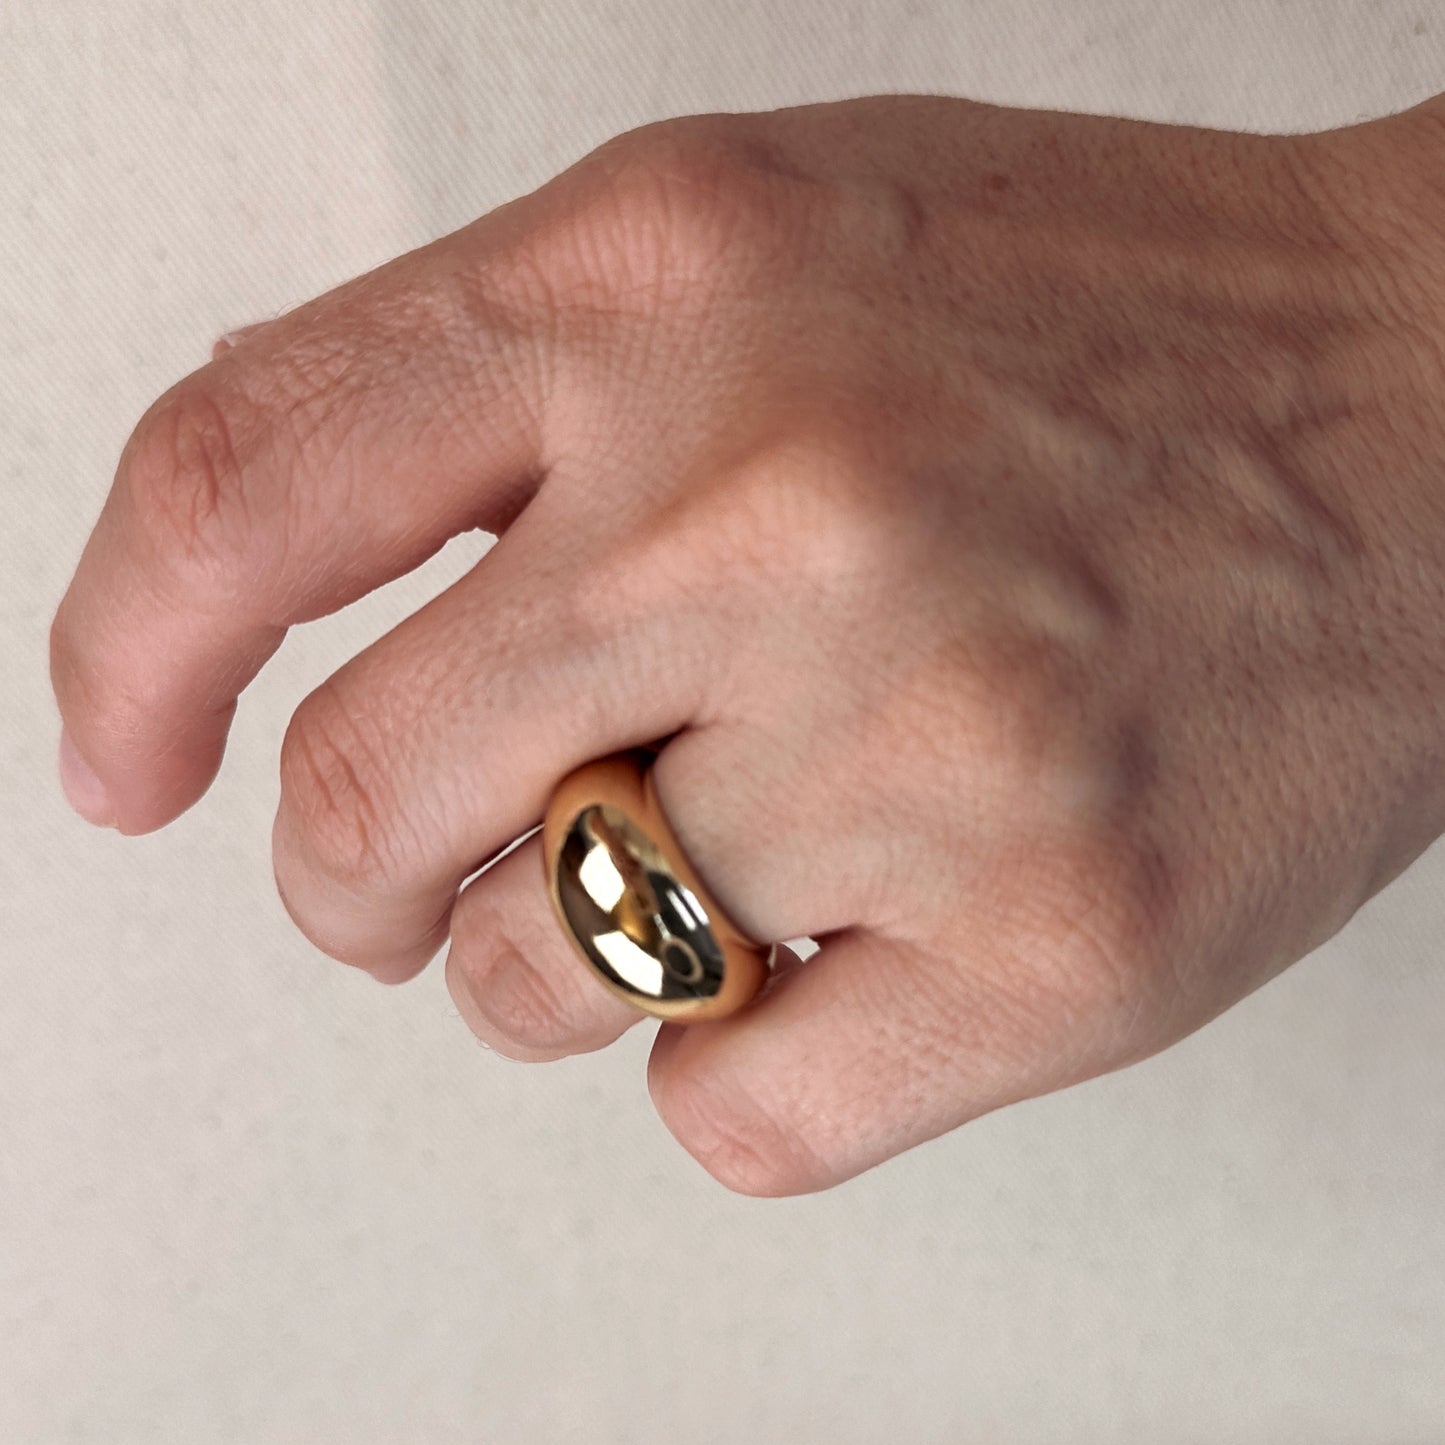 18k Gold Filled Polished Dome Ring